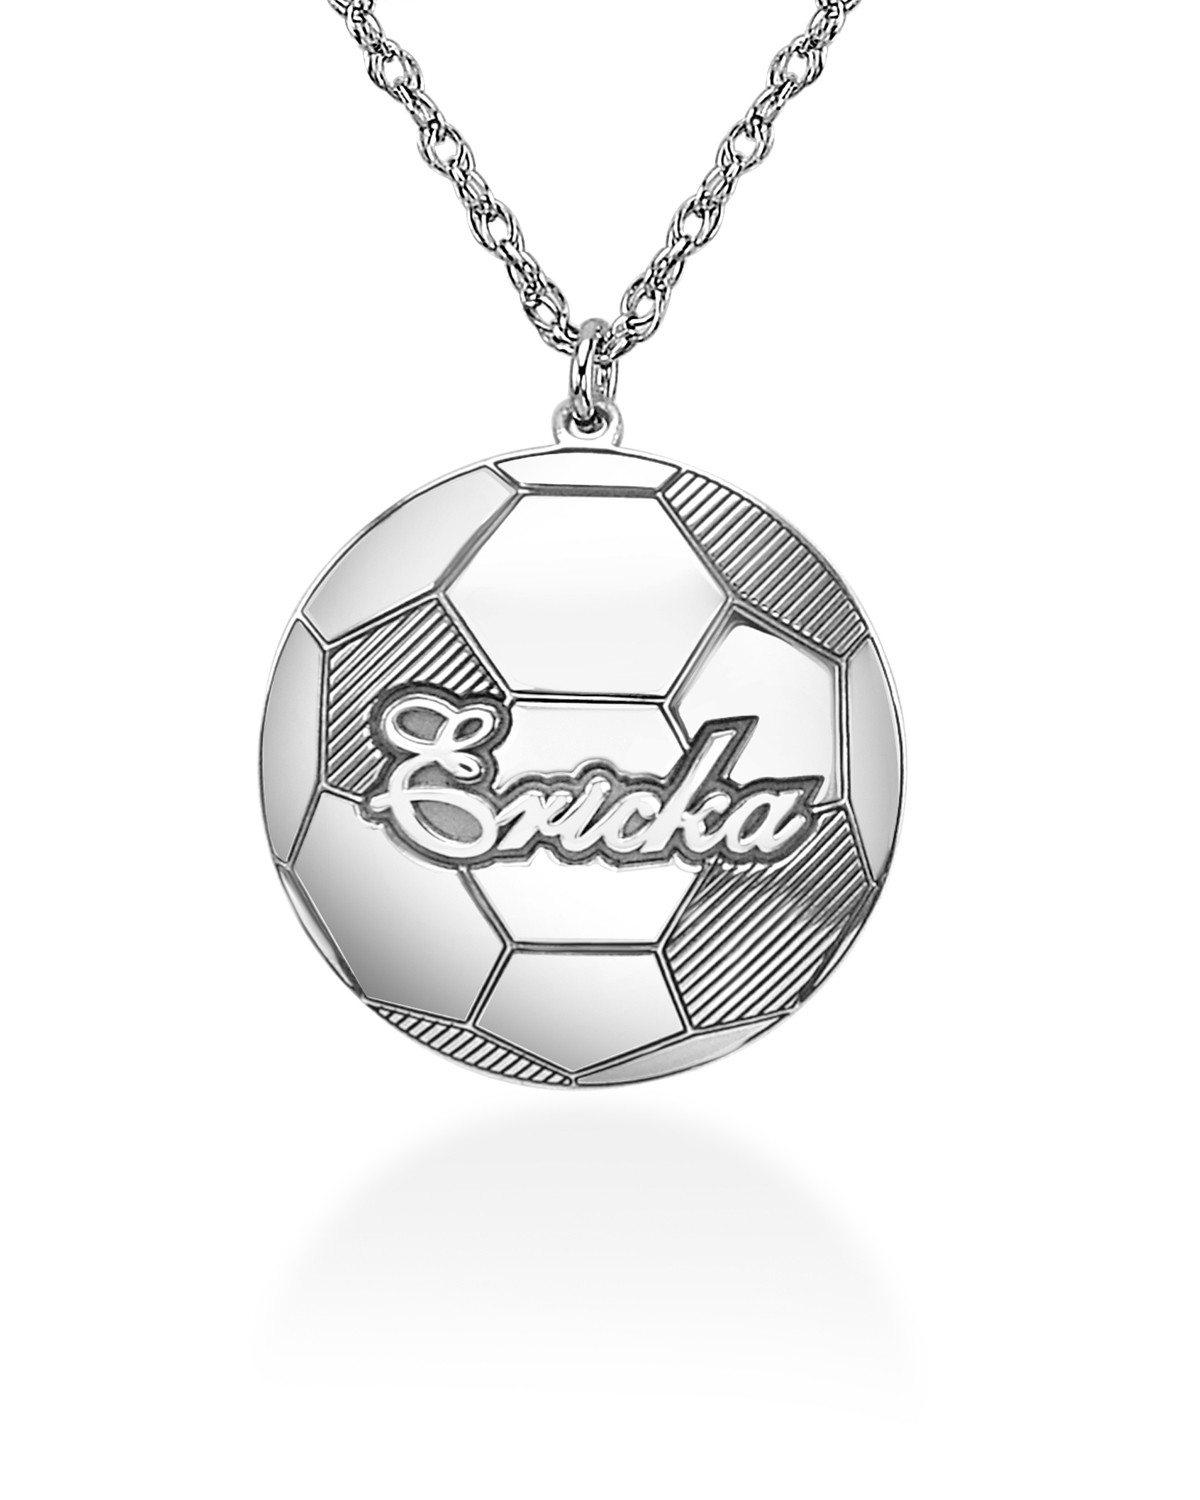 silver Football Connector pendants 24x16mm 20pcs- Soccer Ball charms